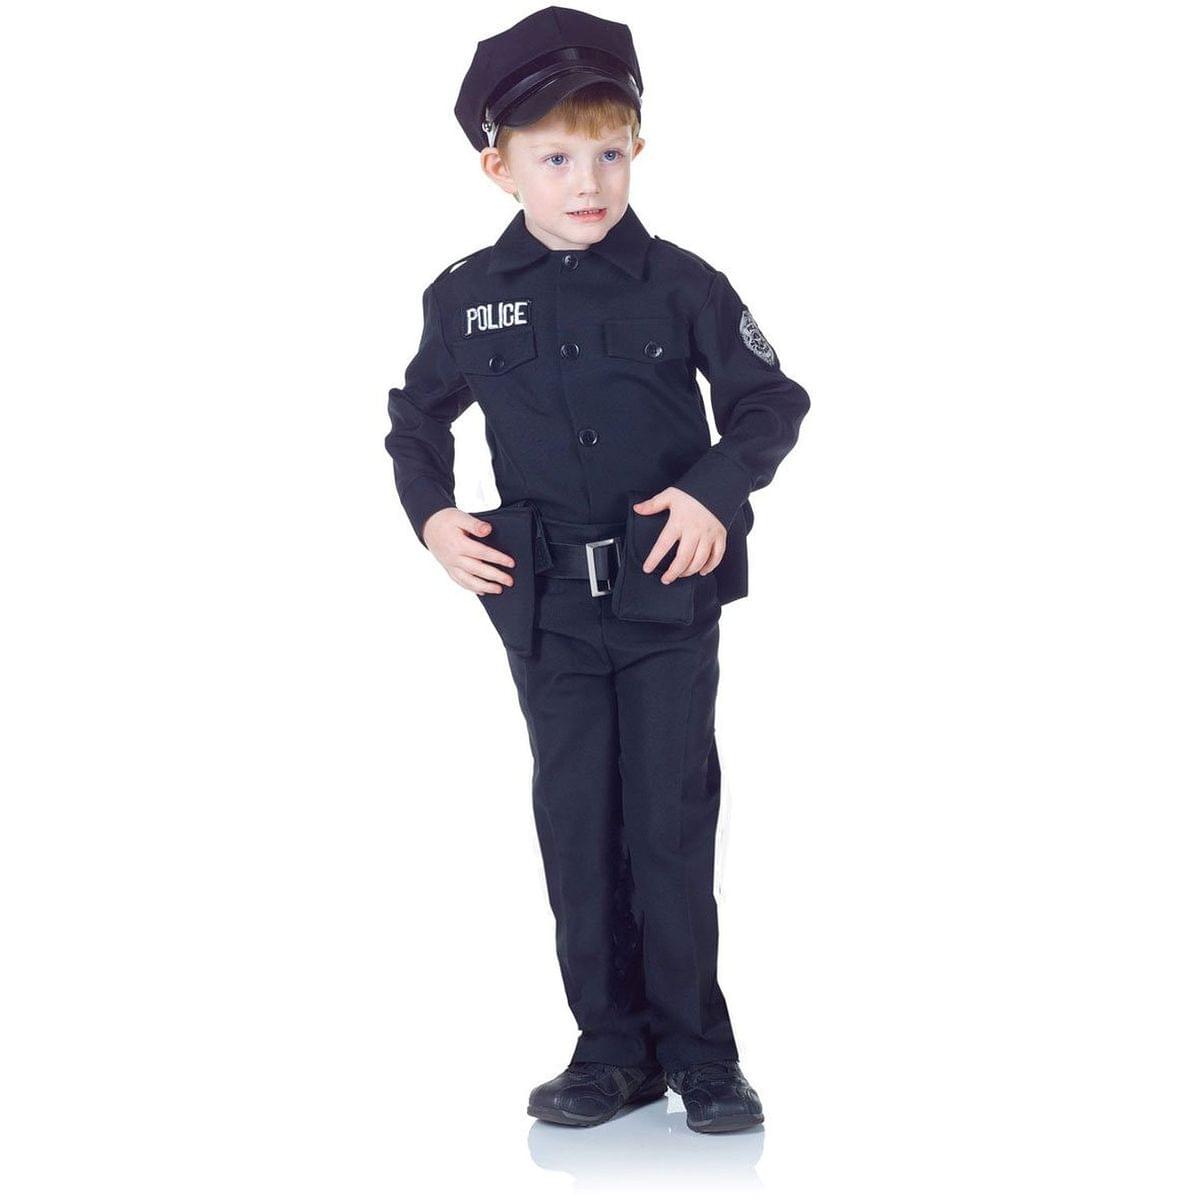 Policeman Child's Costume